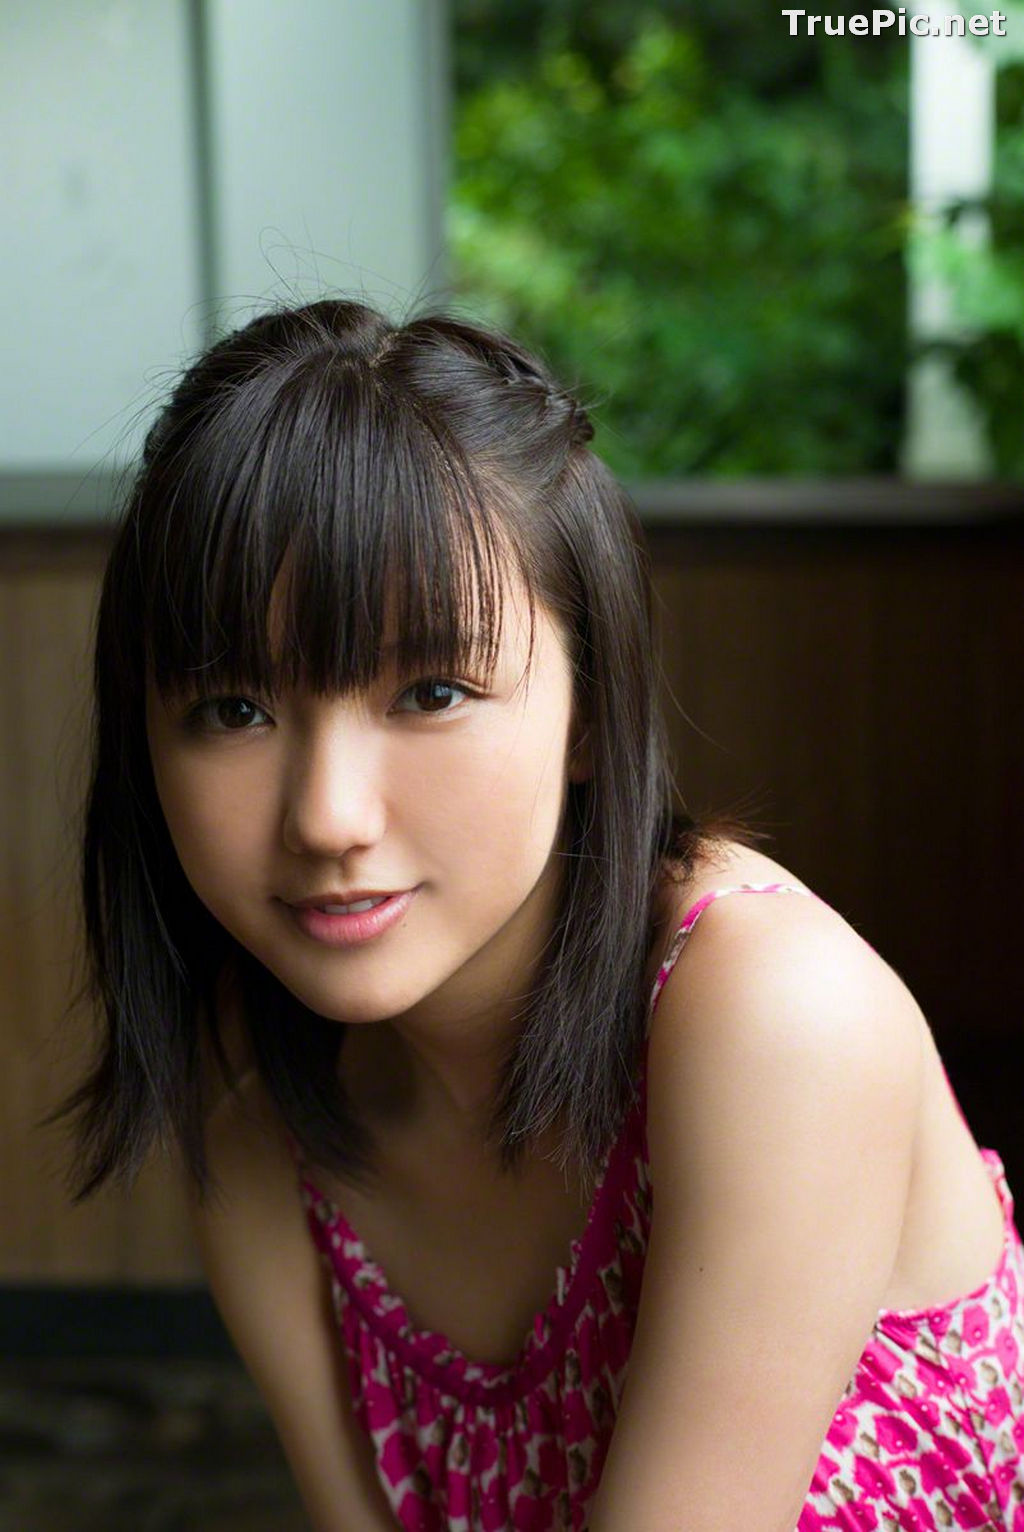 Image Wanibooks No.130 - Japanese Idol Singer and Actress - Erina Mano - TruePic.net - Picture-74